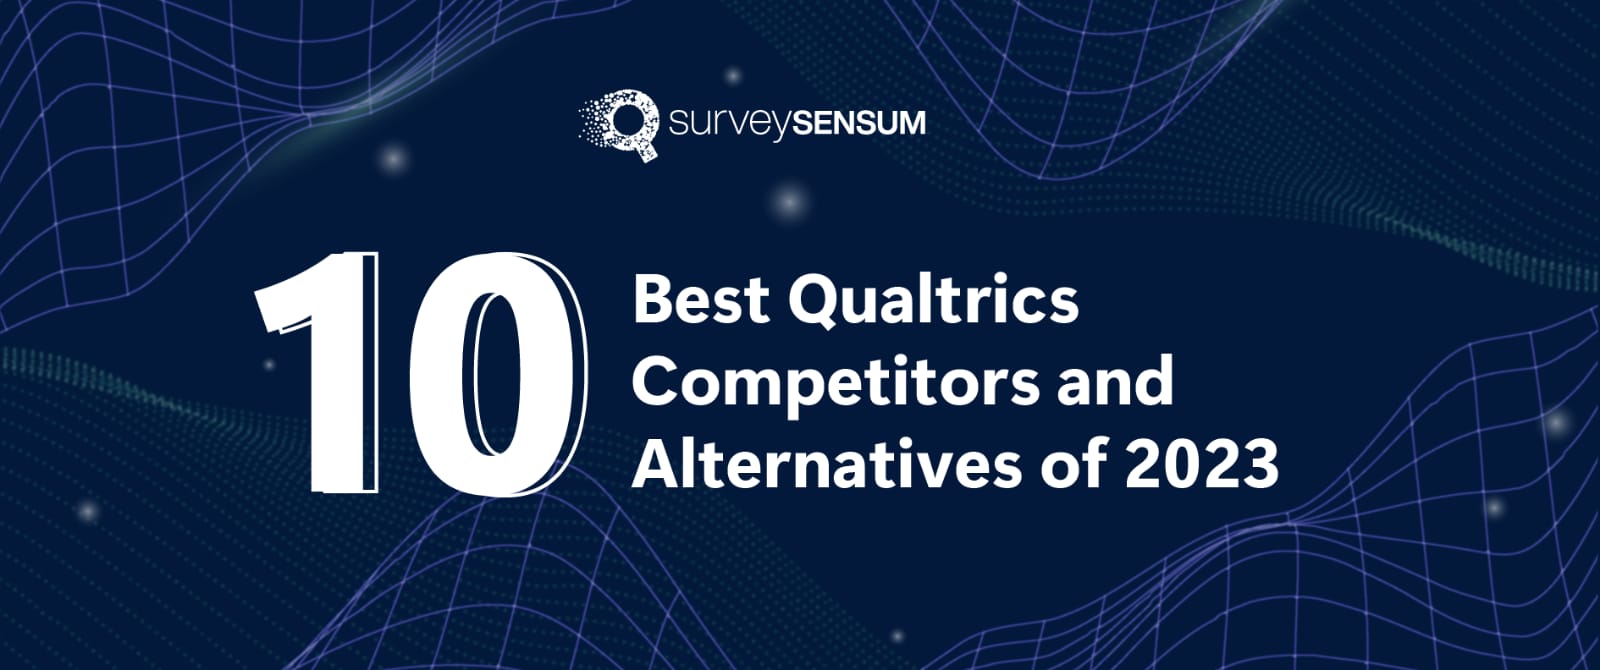 10 Best Qualtrics Competitors and Alternatives in 2023